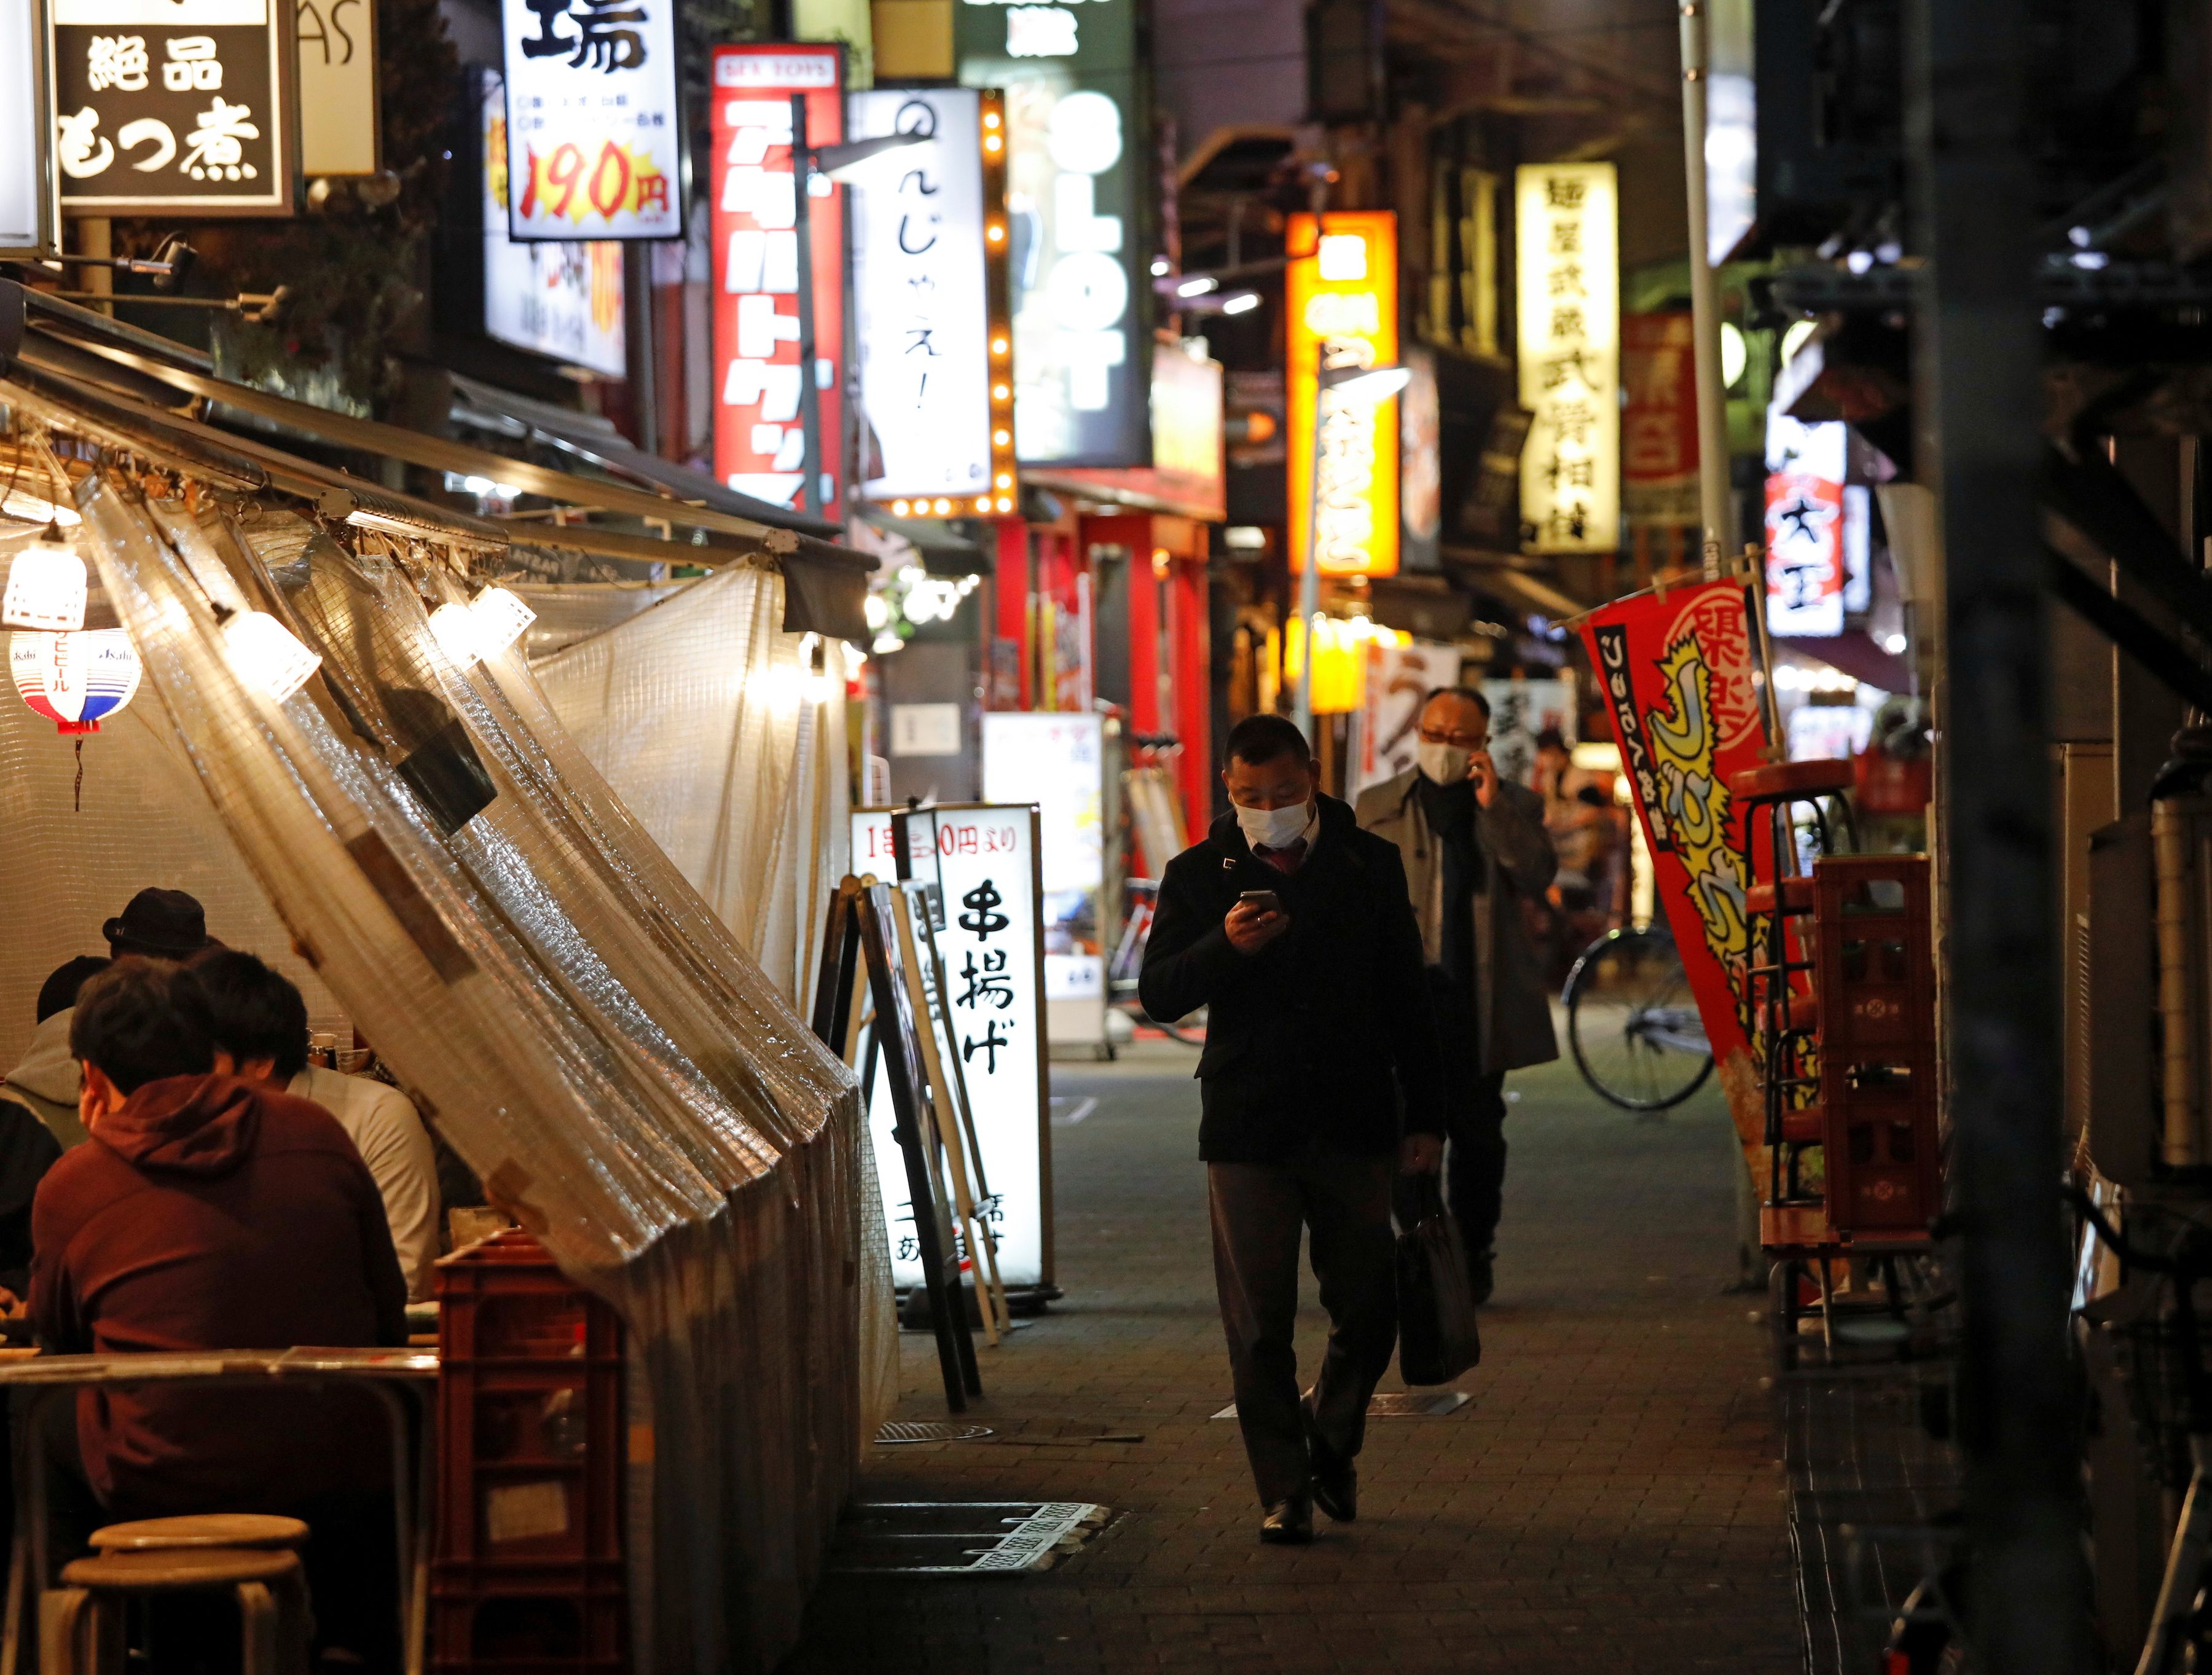 Kirin beer executive questions sweeping shutdown of Tokyo late-night bars